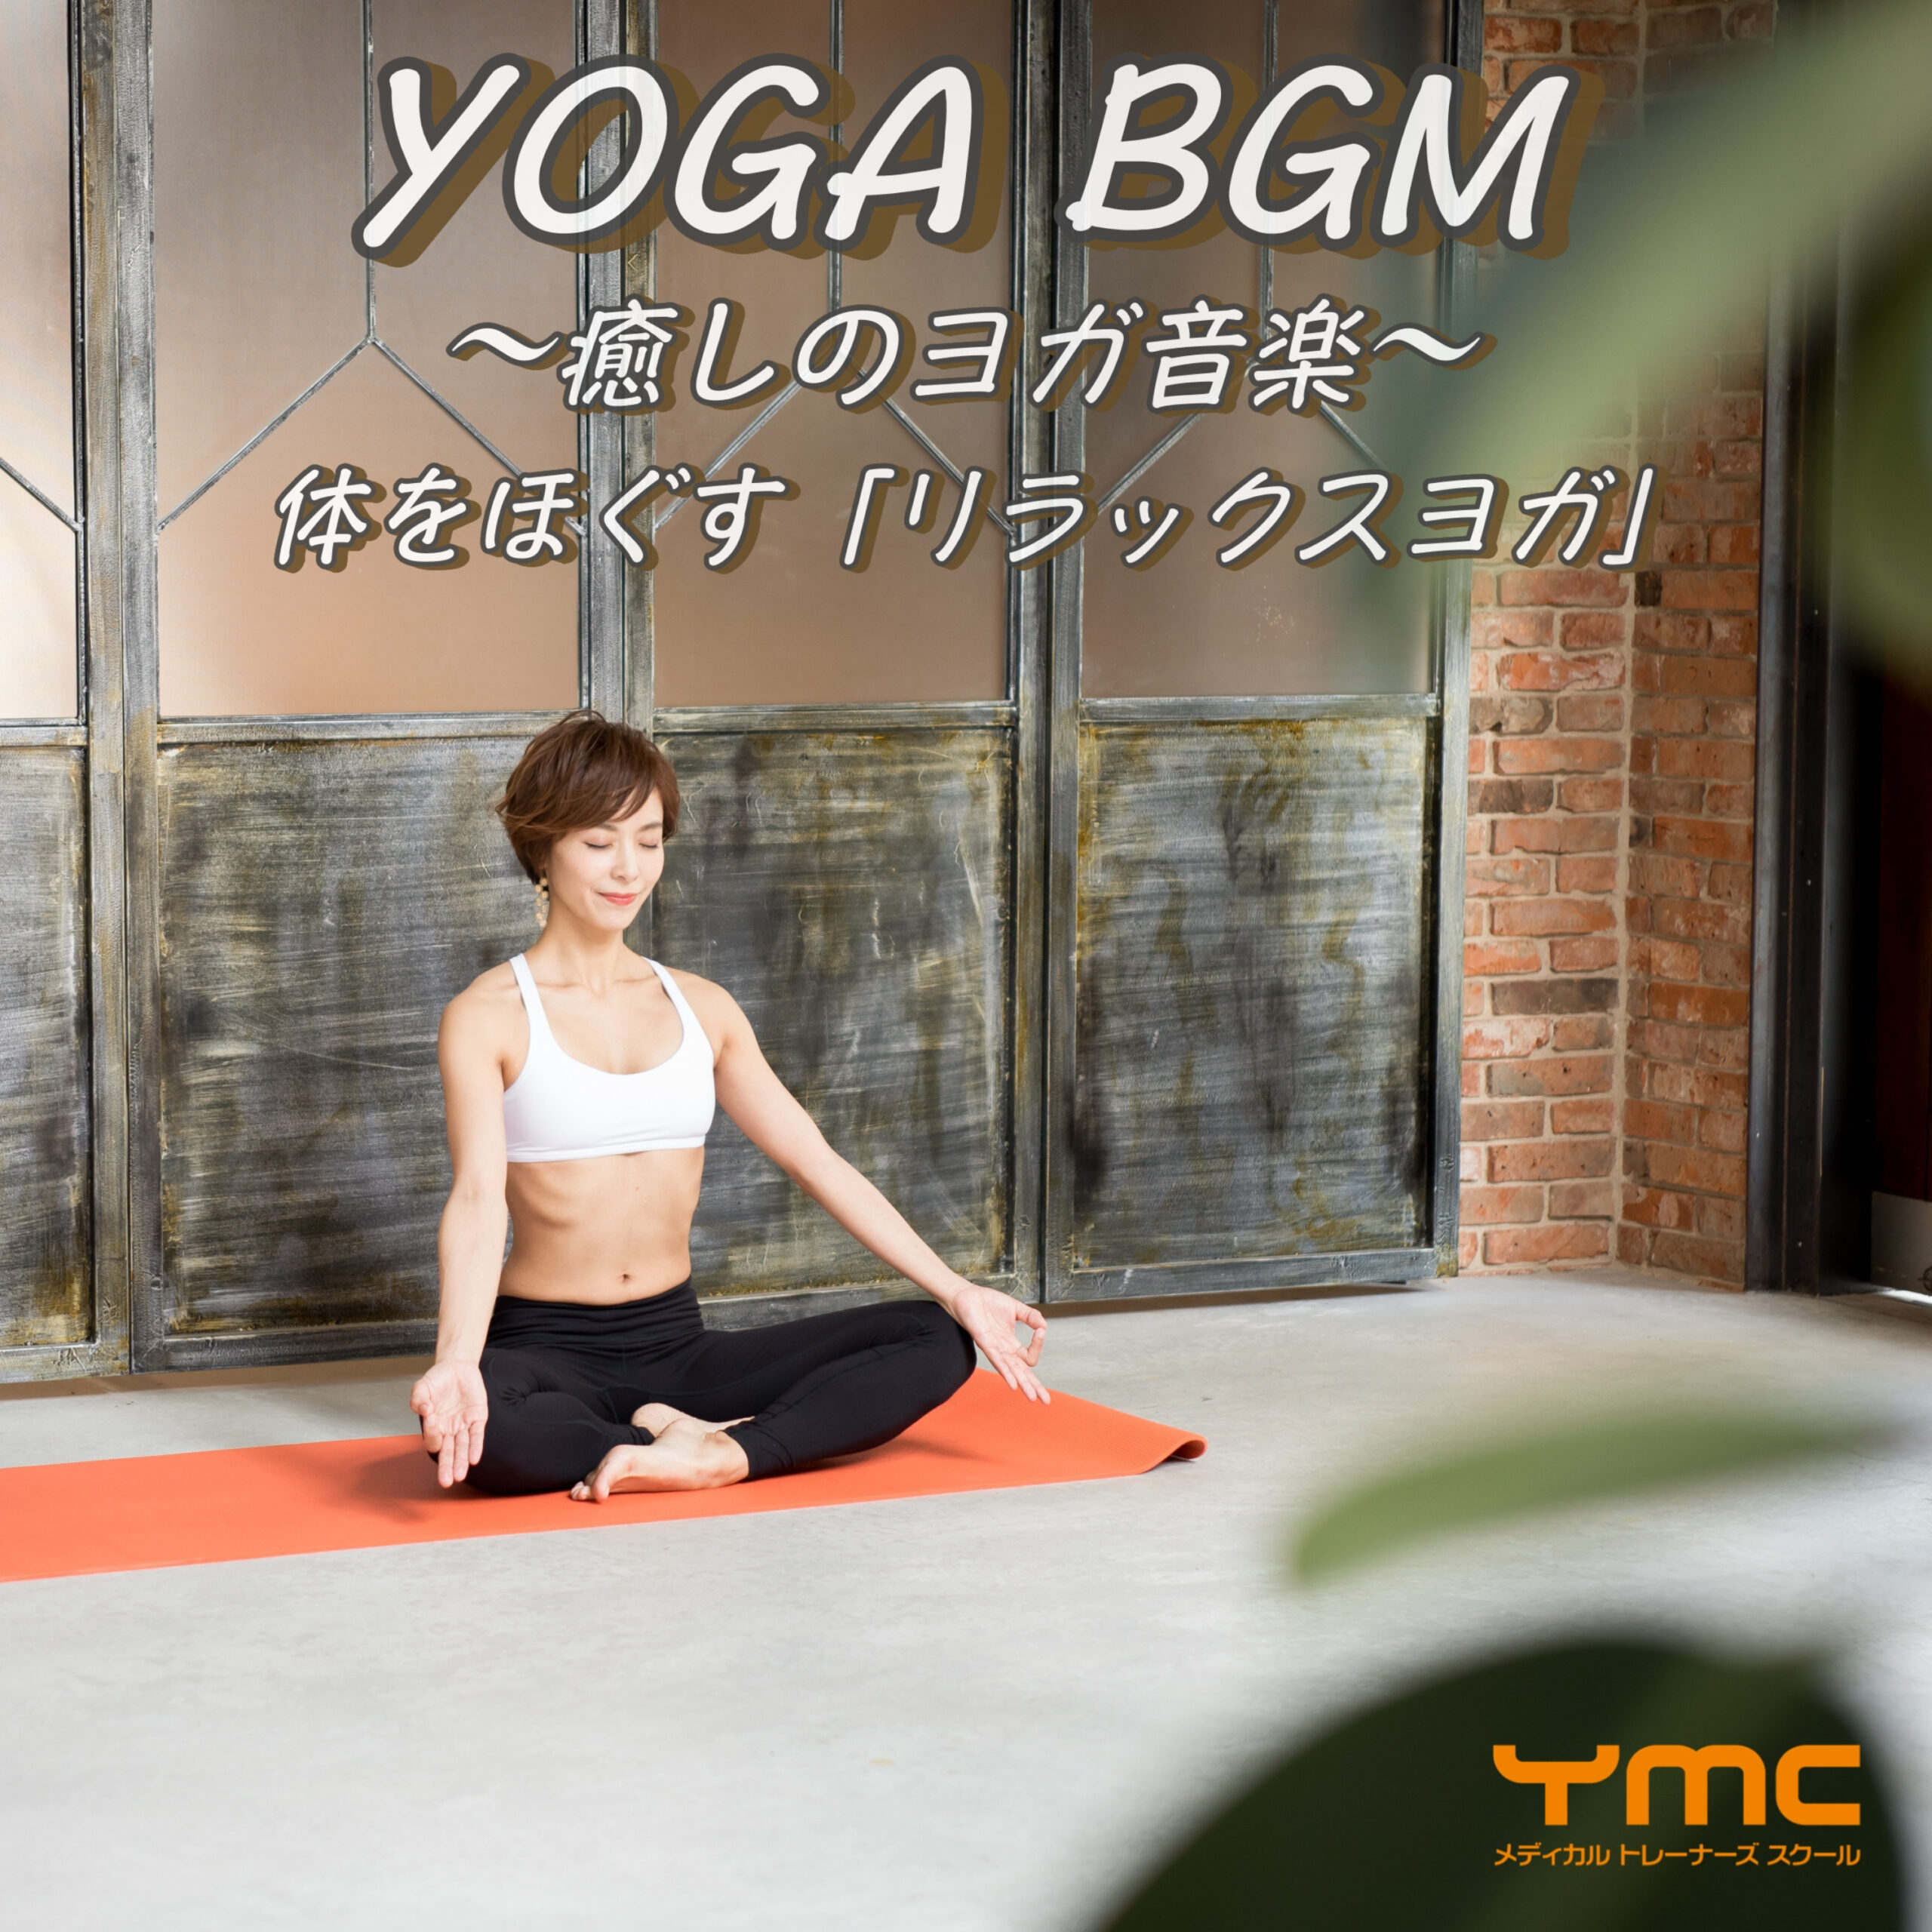 YOGA BGM ～癒しのヨガ音楽～ 体をほぐす「リラックスヨガ」